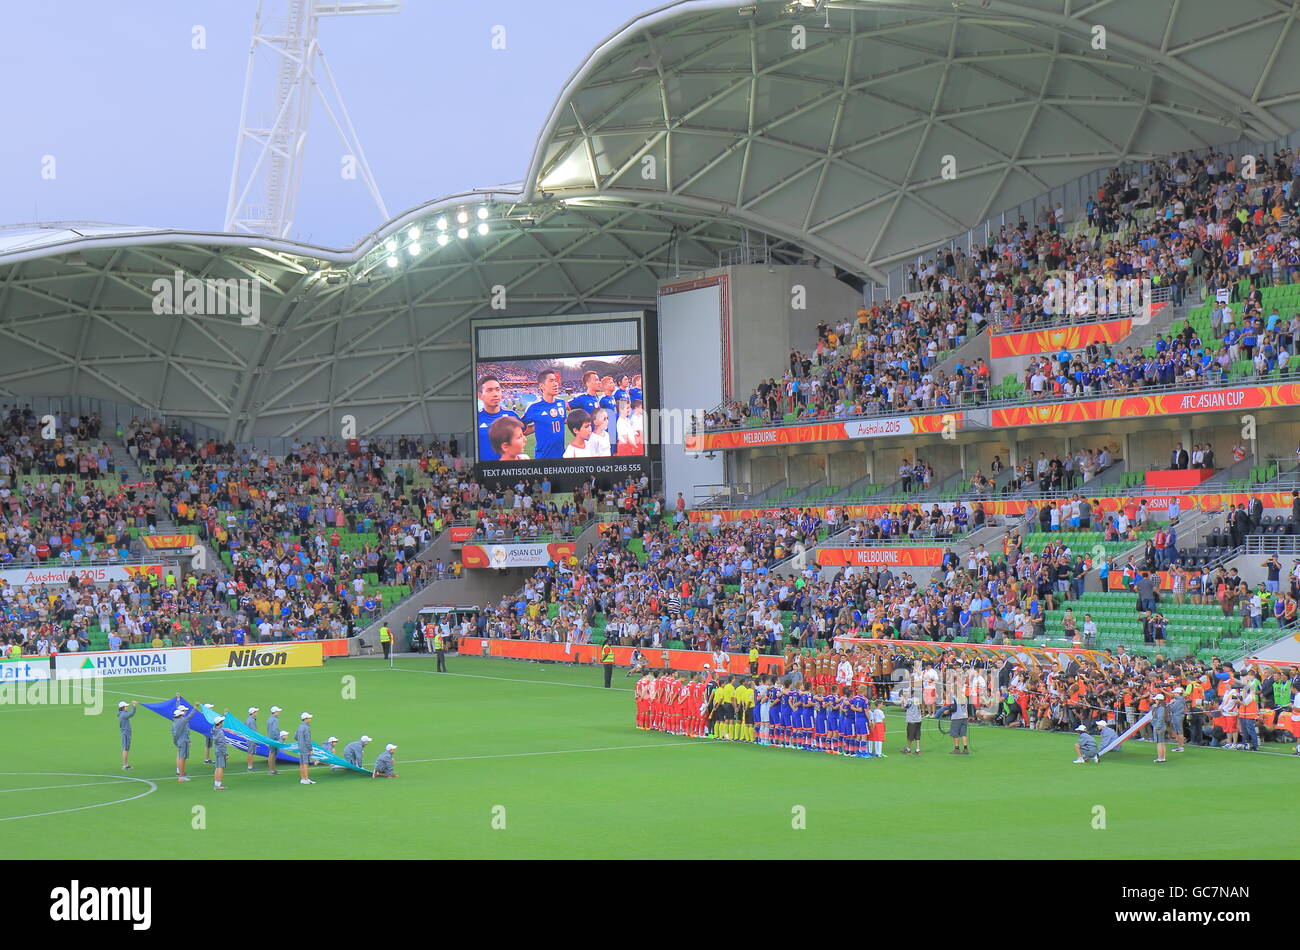 Japan vs Jordan at the Asian Cup Football tournament in Melbourne Australia. Stock Photo